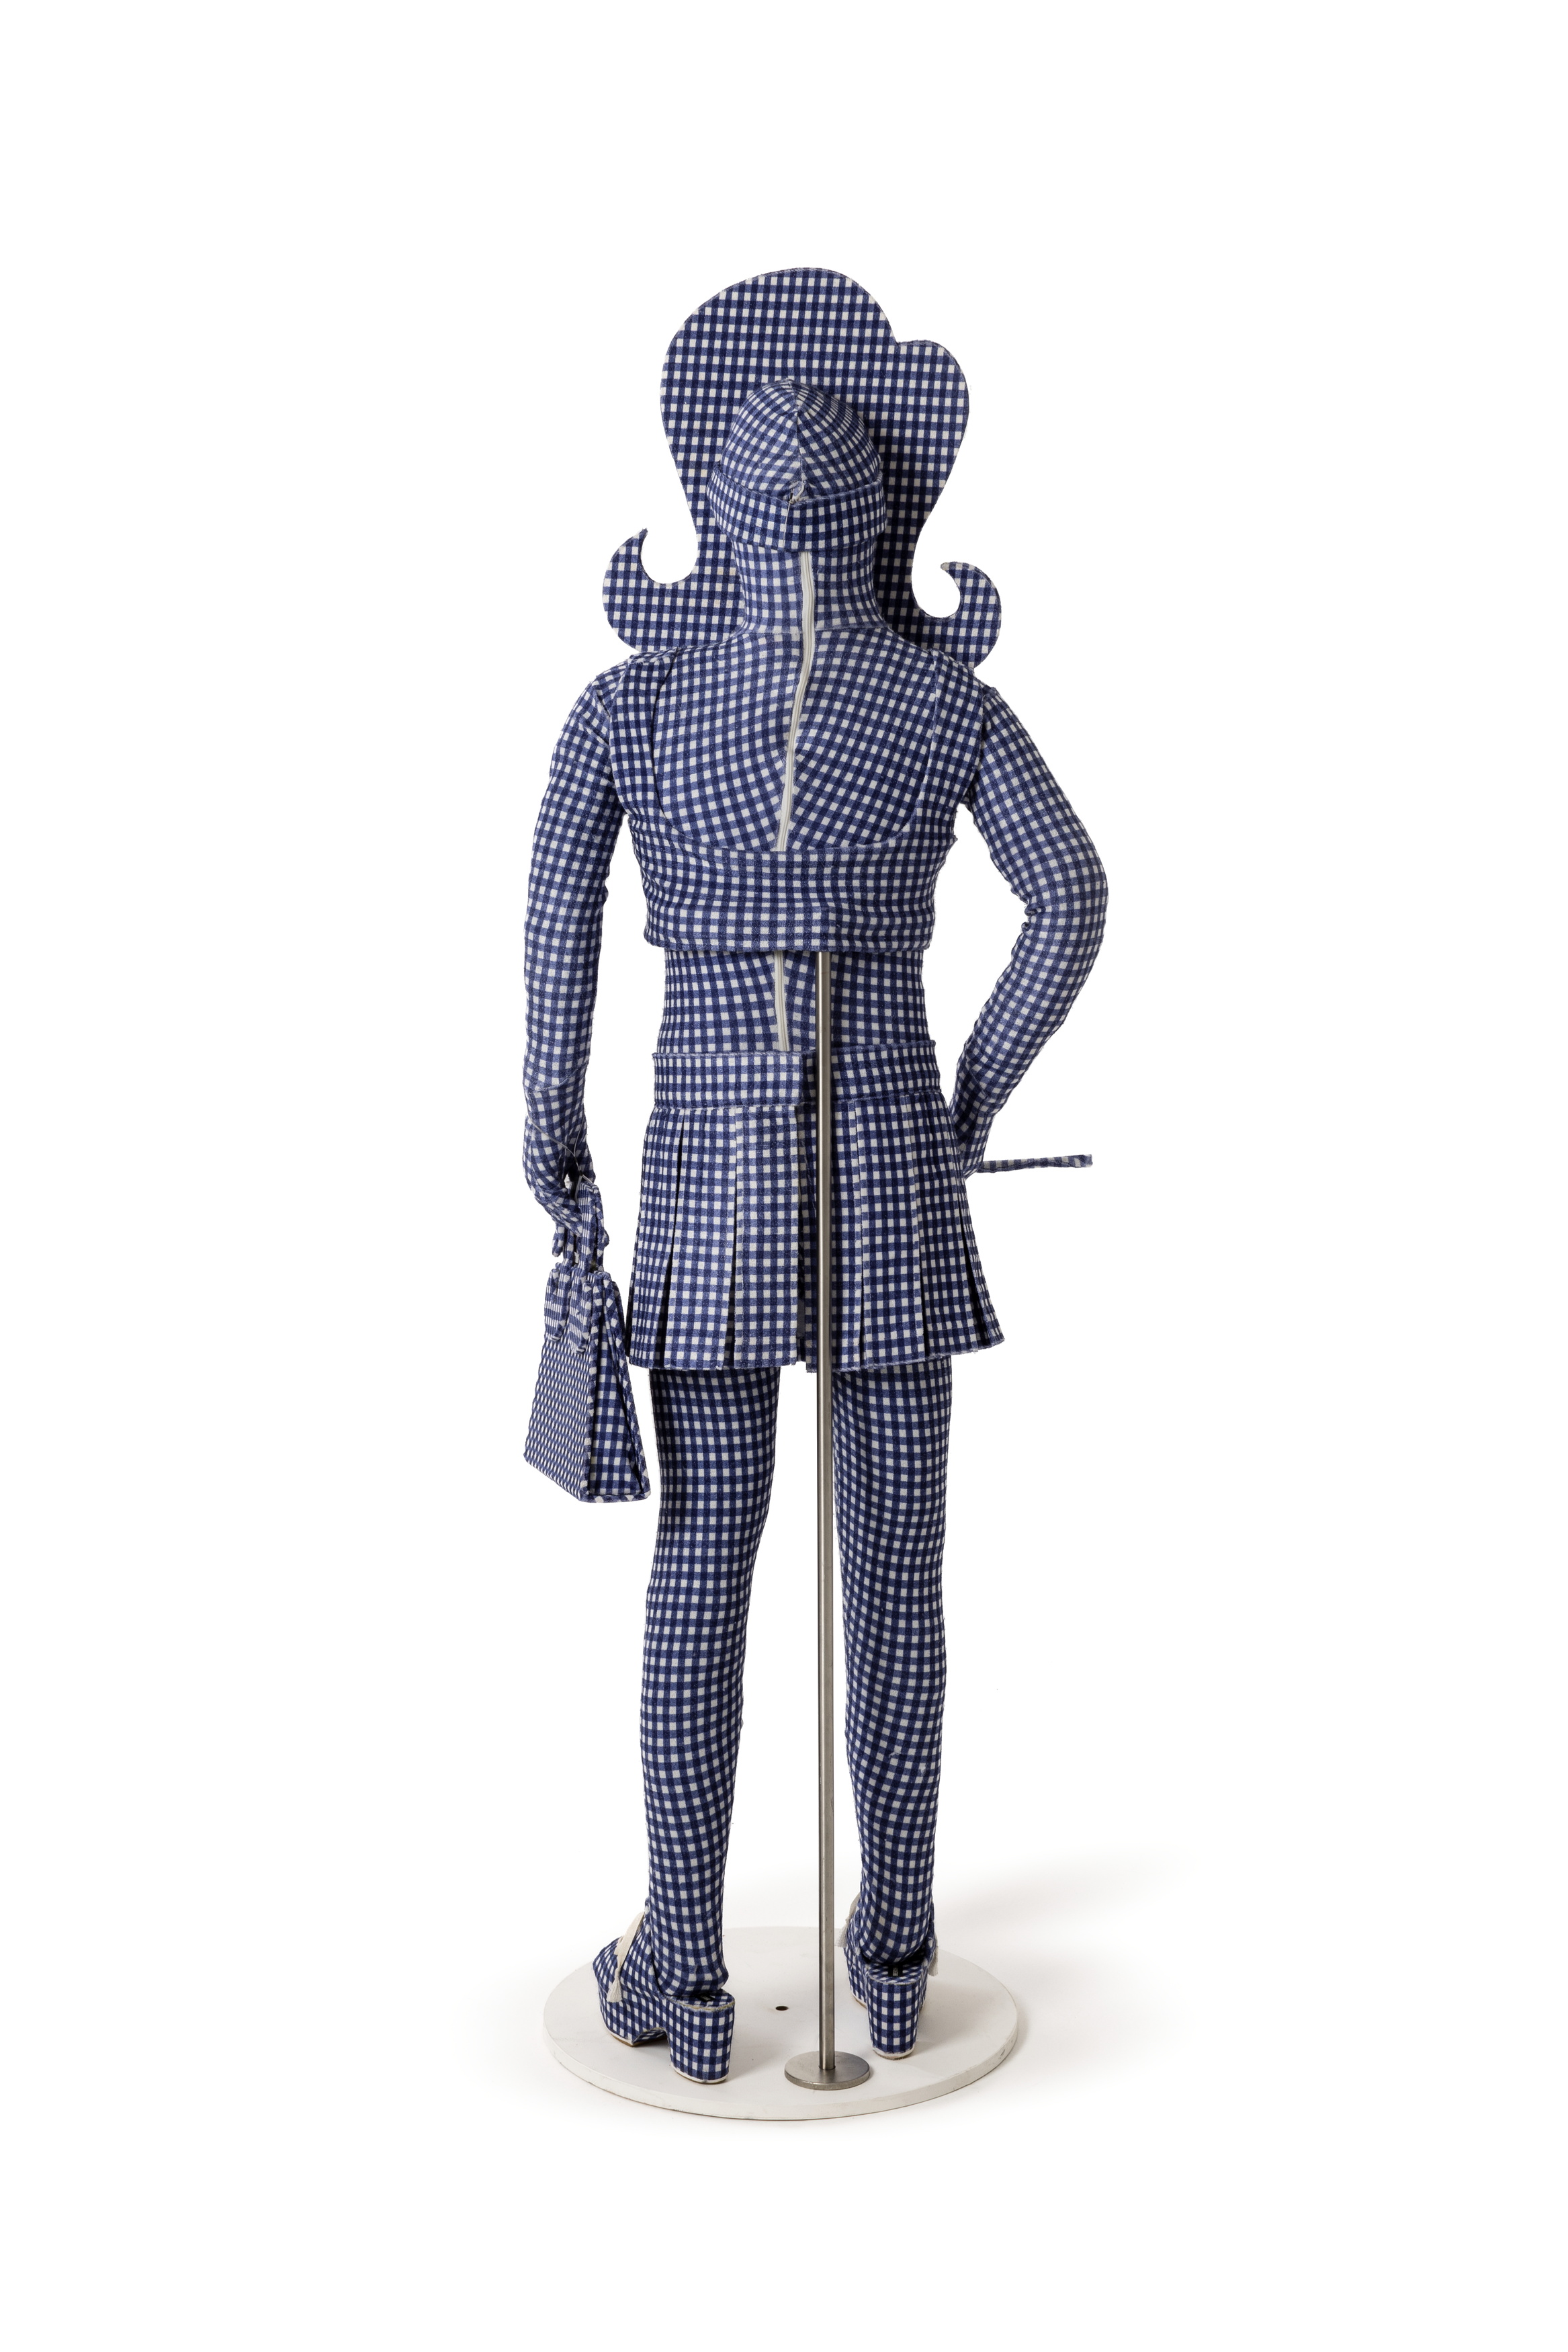 'Gingham Woman' costume by Brenton Heath-Kerr